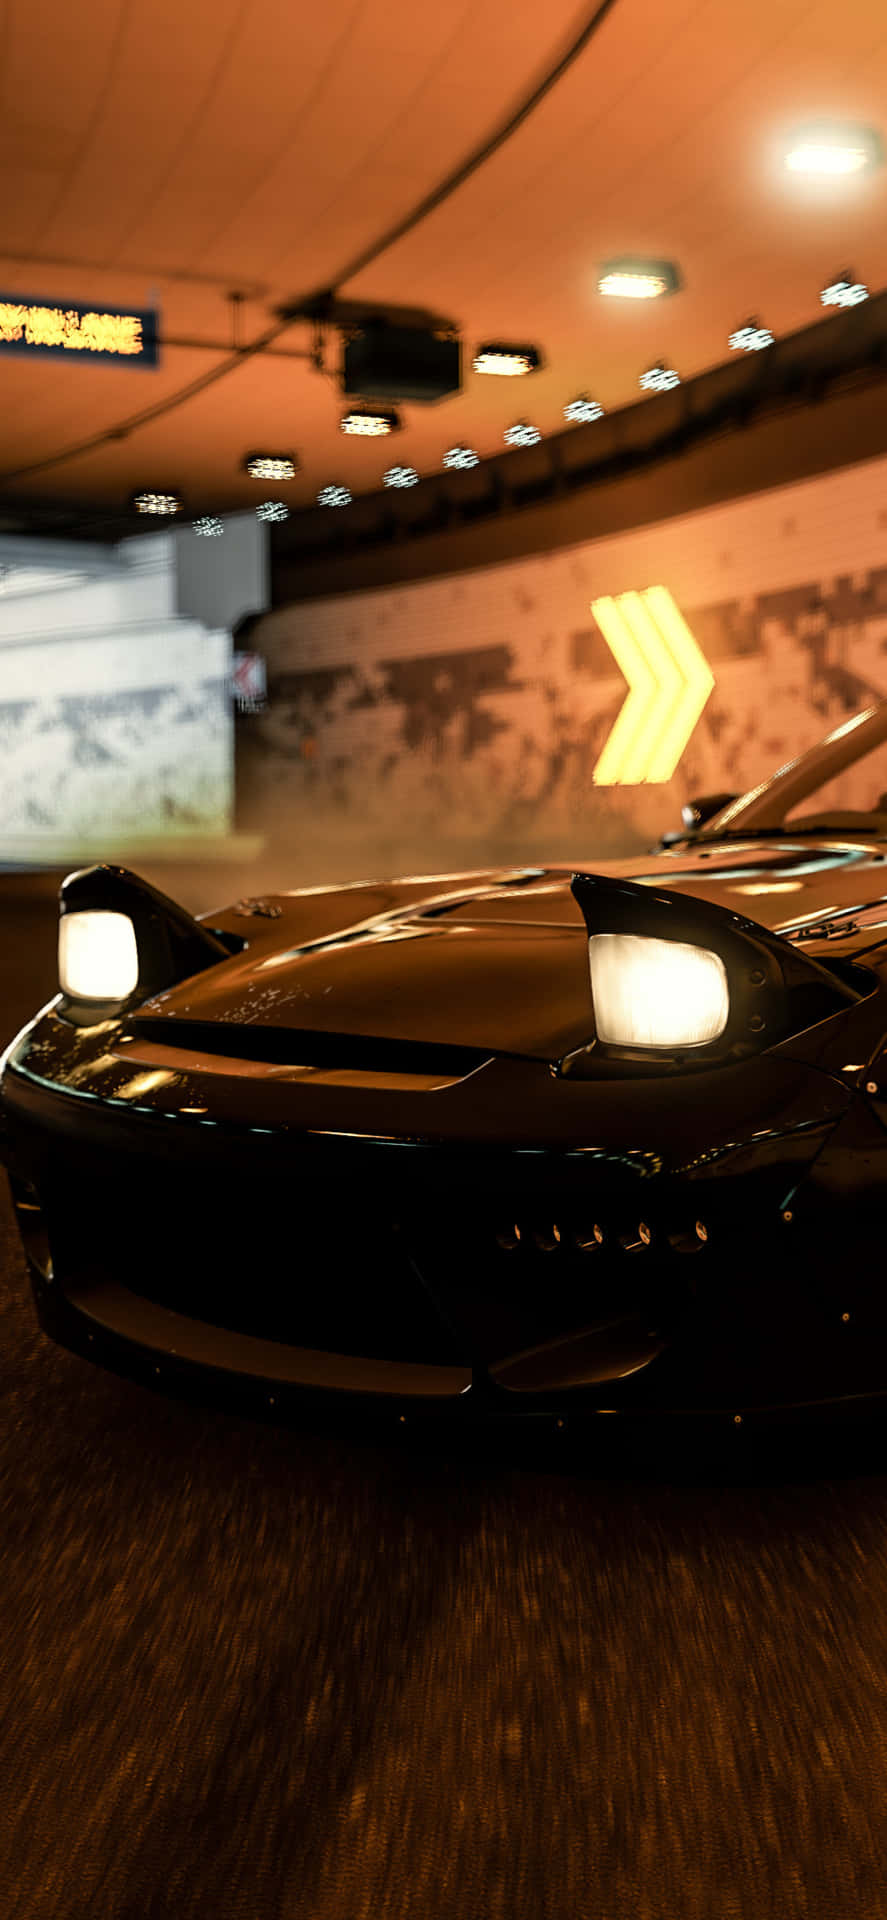 Black Mercedes iPhone X Forza Motorsport 7 Background